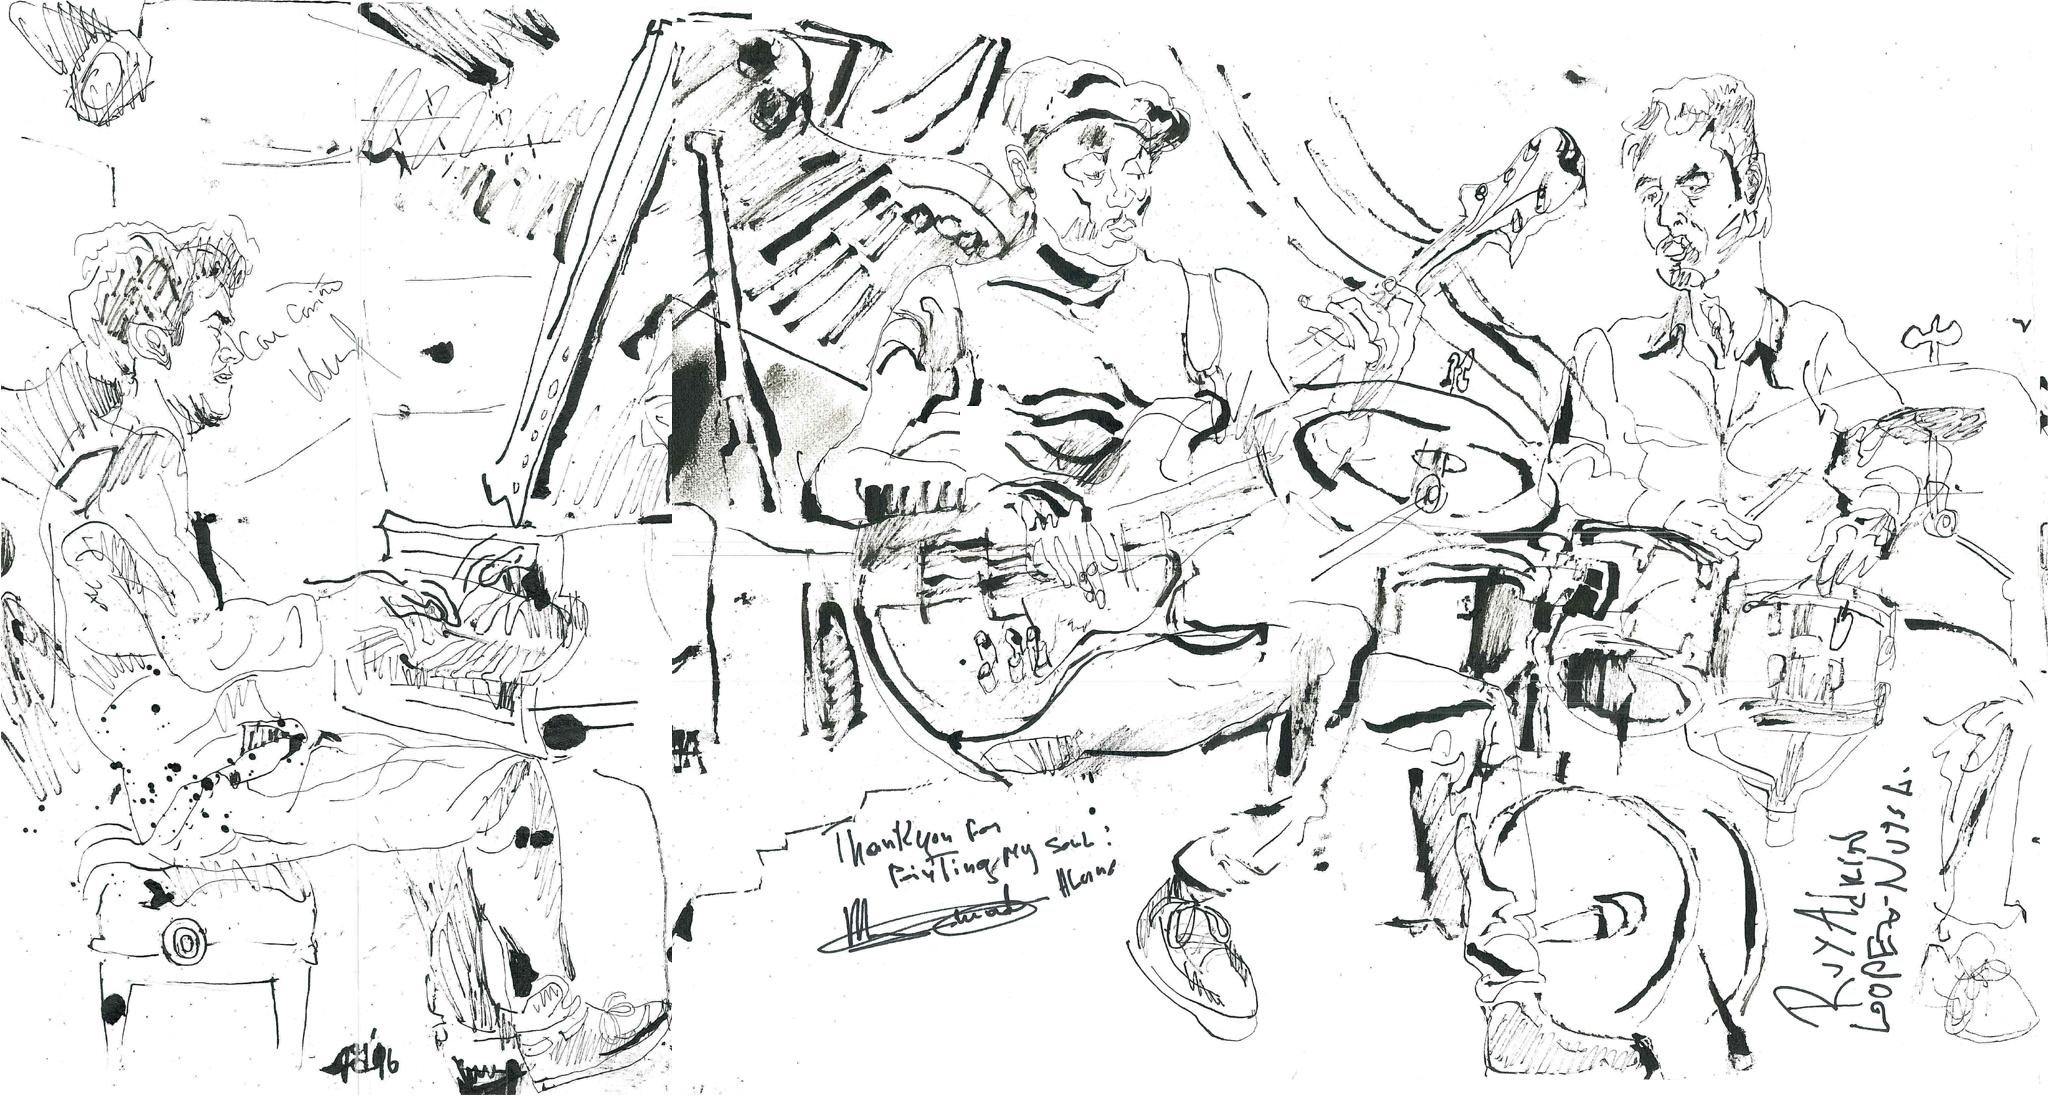 Jonathan Glass Figurative Art - Harold Lopez Nussa Trio - Ink on Paper - Original Contemporary Sketch